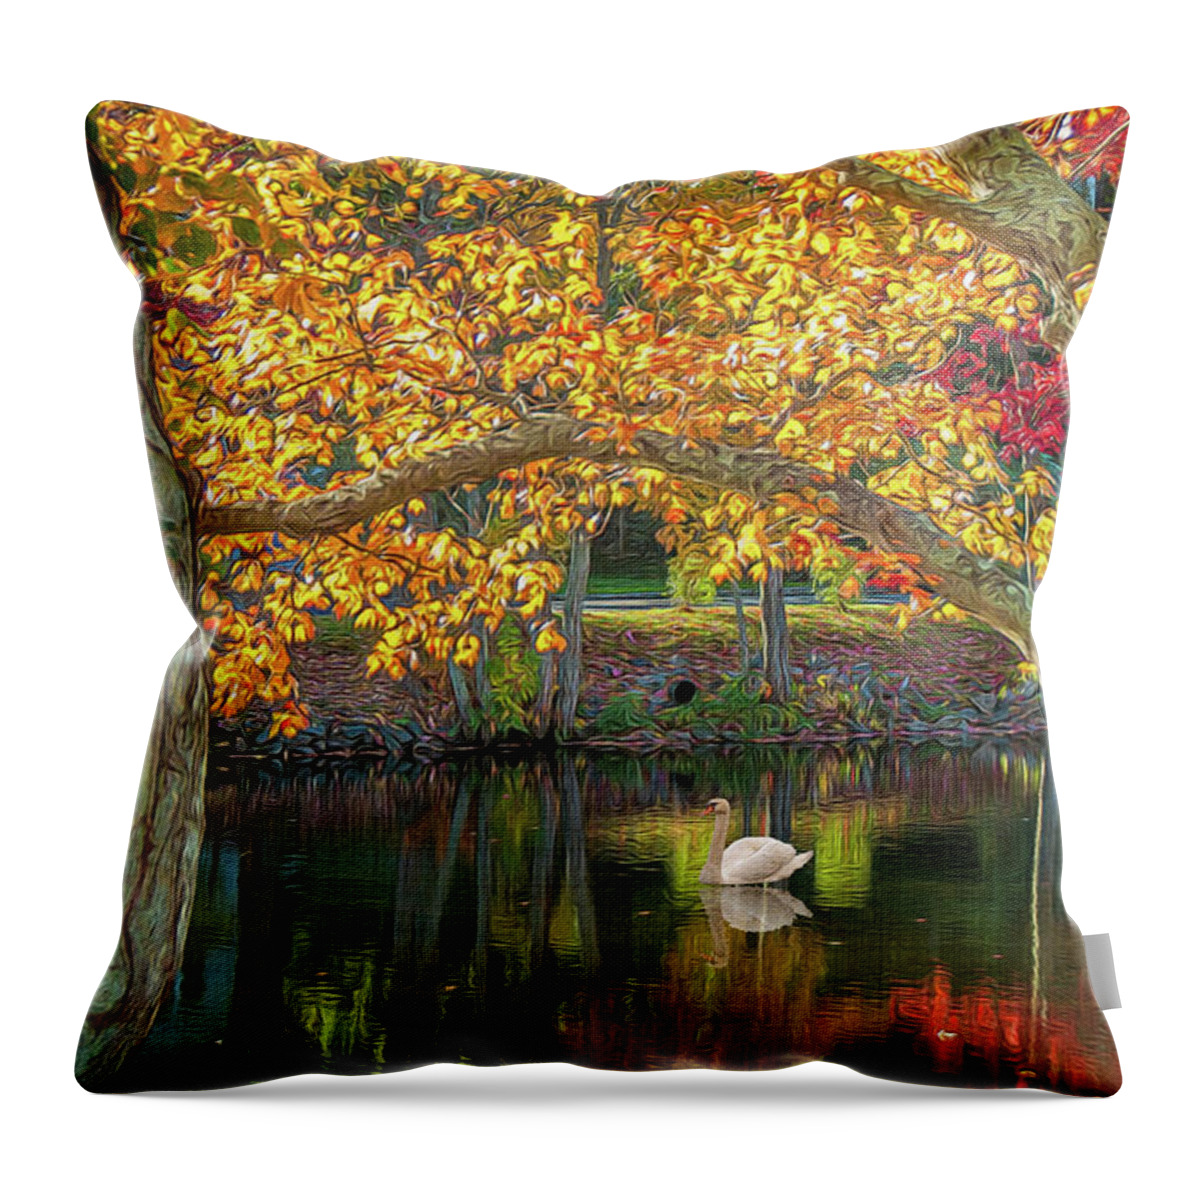 Autumn Throw Pillow featuring the photograph Autumn Serenity by Cathy Kovarik